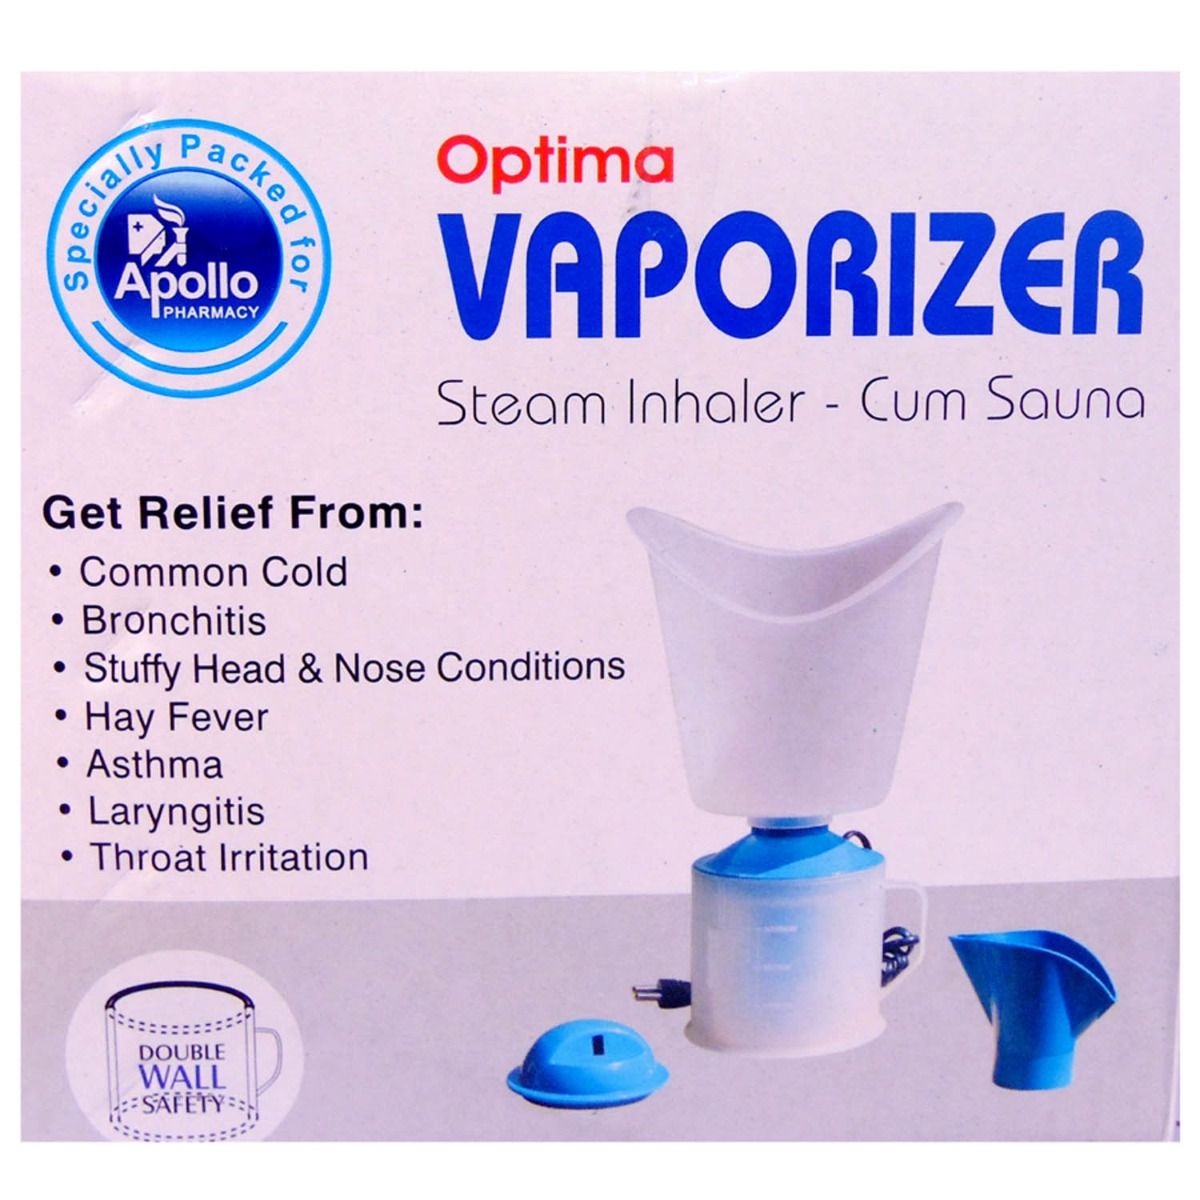 Apollo Pharmacy Optima Vaporizer Steam Inhaler, 1 Count, Pack of 1 